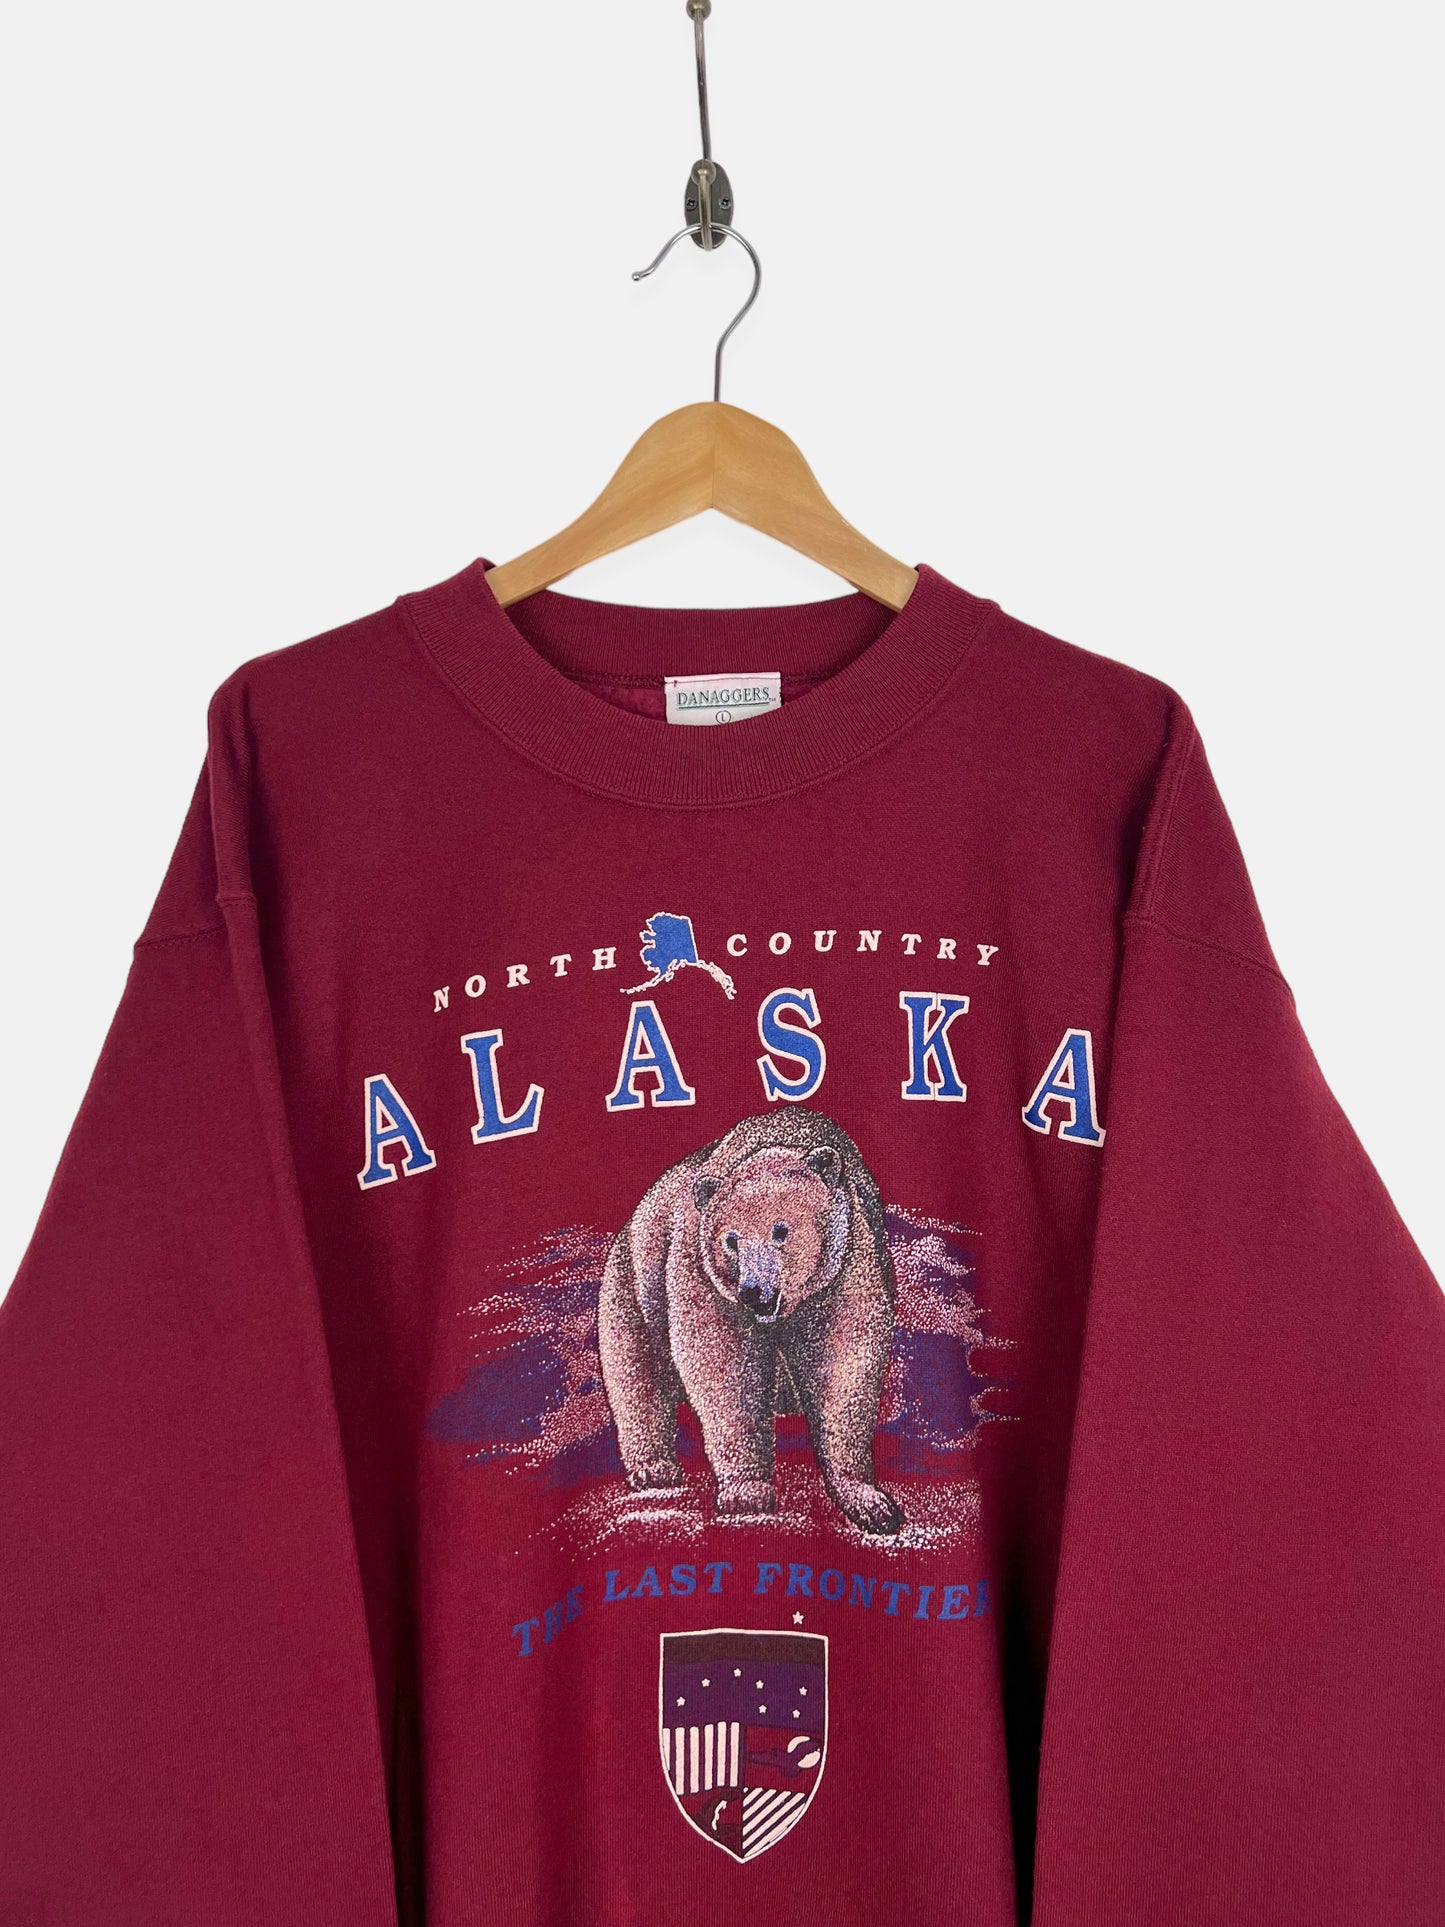 90's Alaska USA Made Vintage Sweatshirt Size L